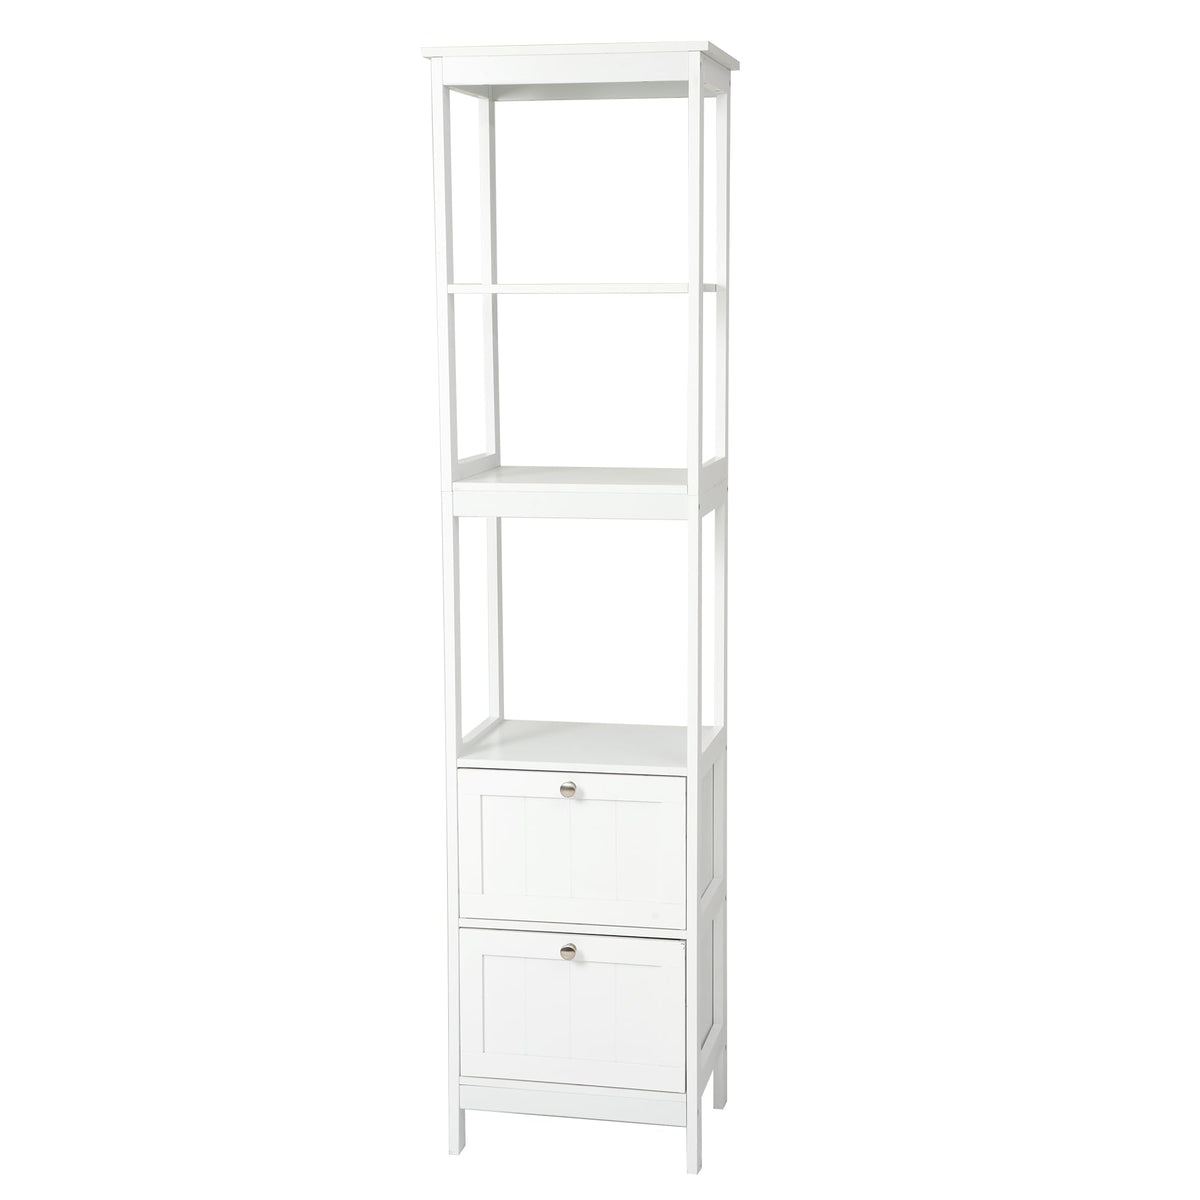 Anko Panelled 5 Tier Shelf | Multi-Drawer Bathroom & livingroom Organizer Rack | MDF Storage Unit with Bedroom Furniture, Office/Home Decoration | 160 x 40 x 30cm | 25 Kg Capacity, White